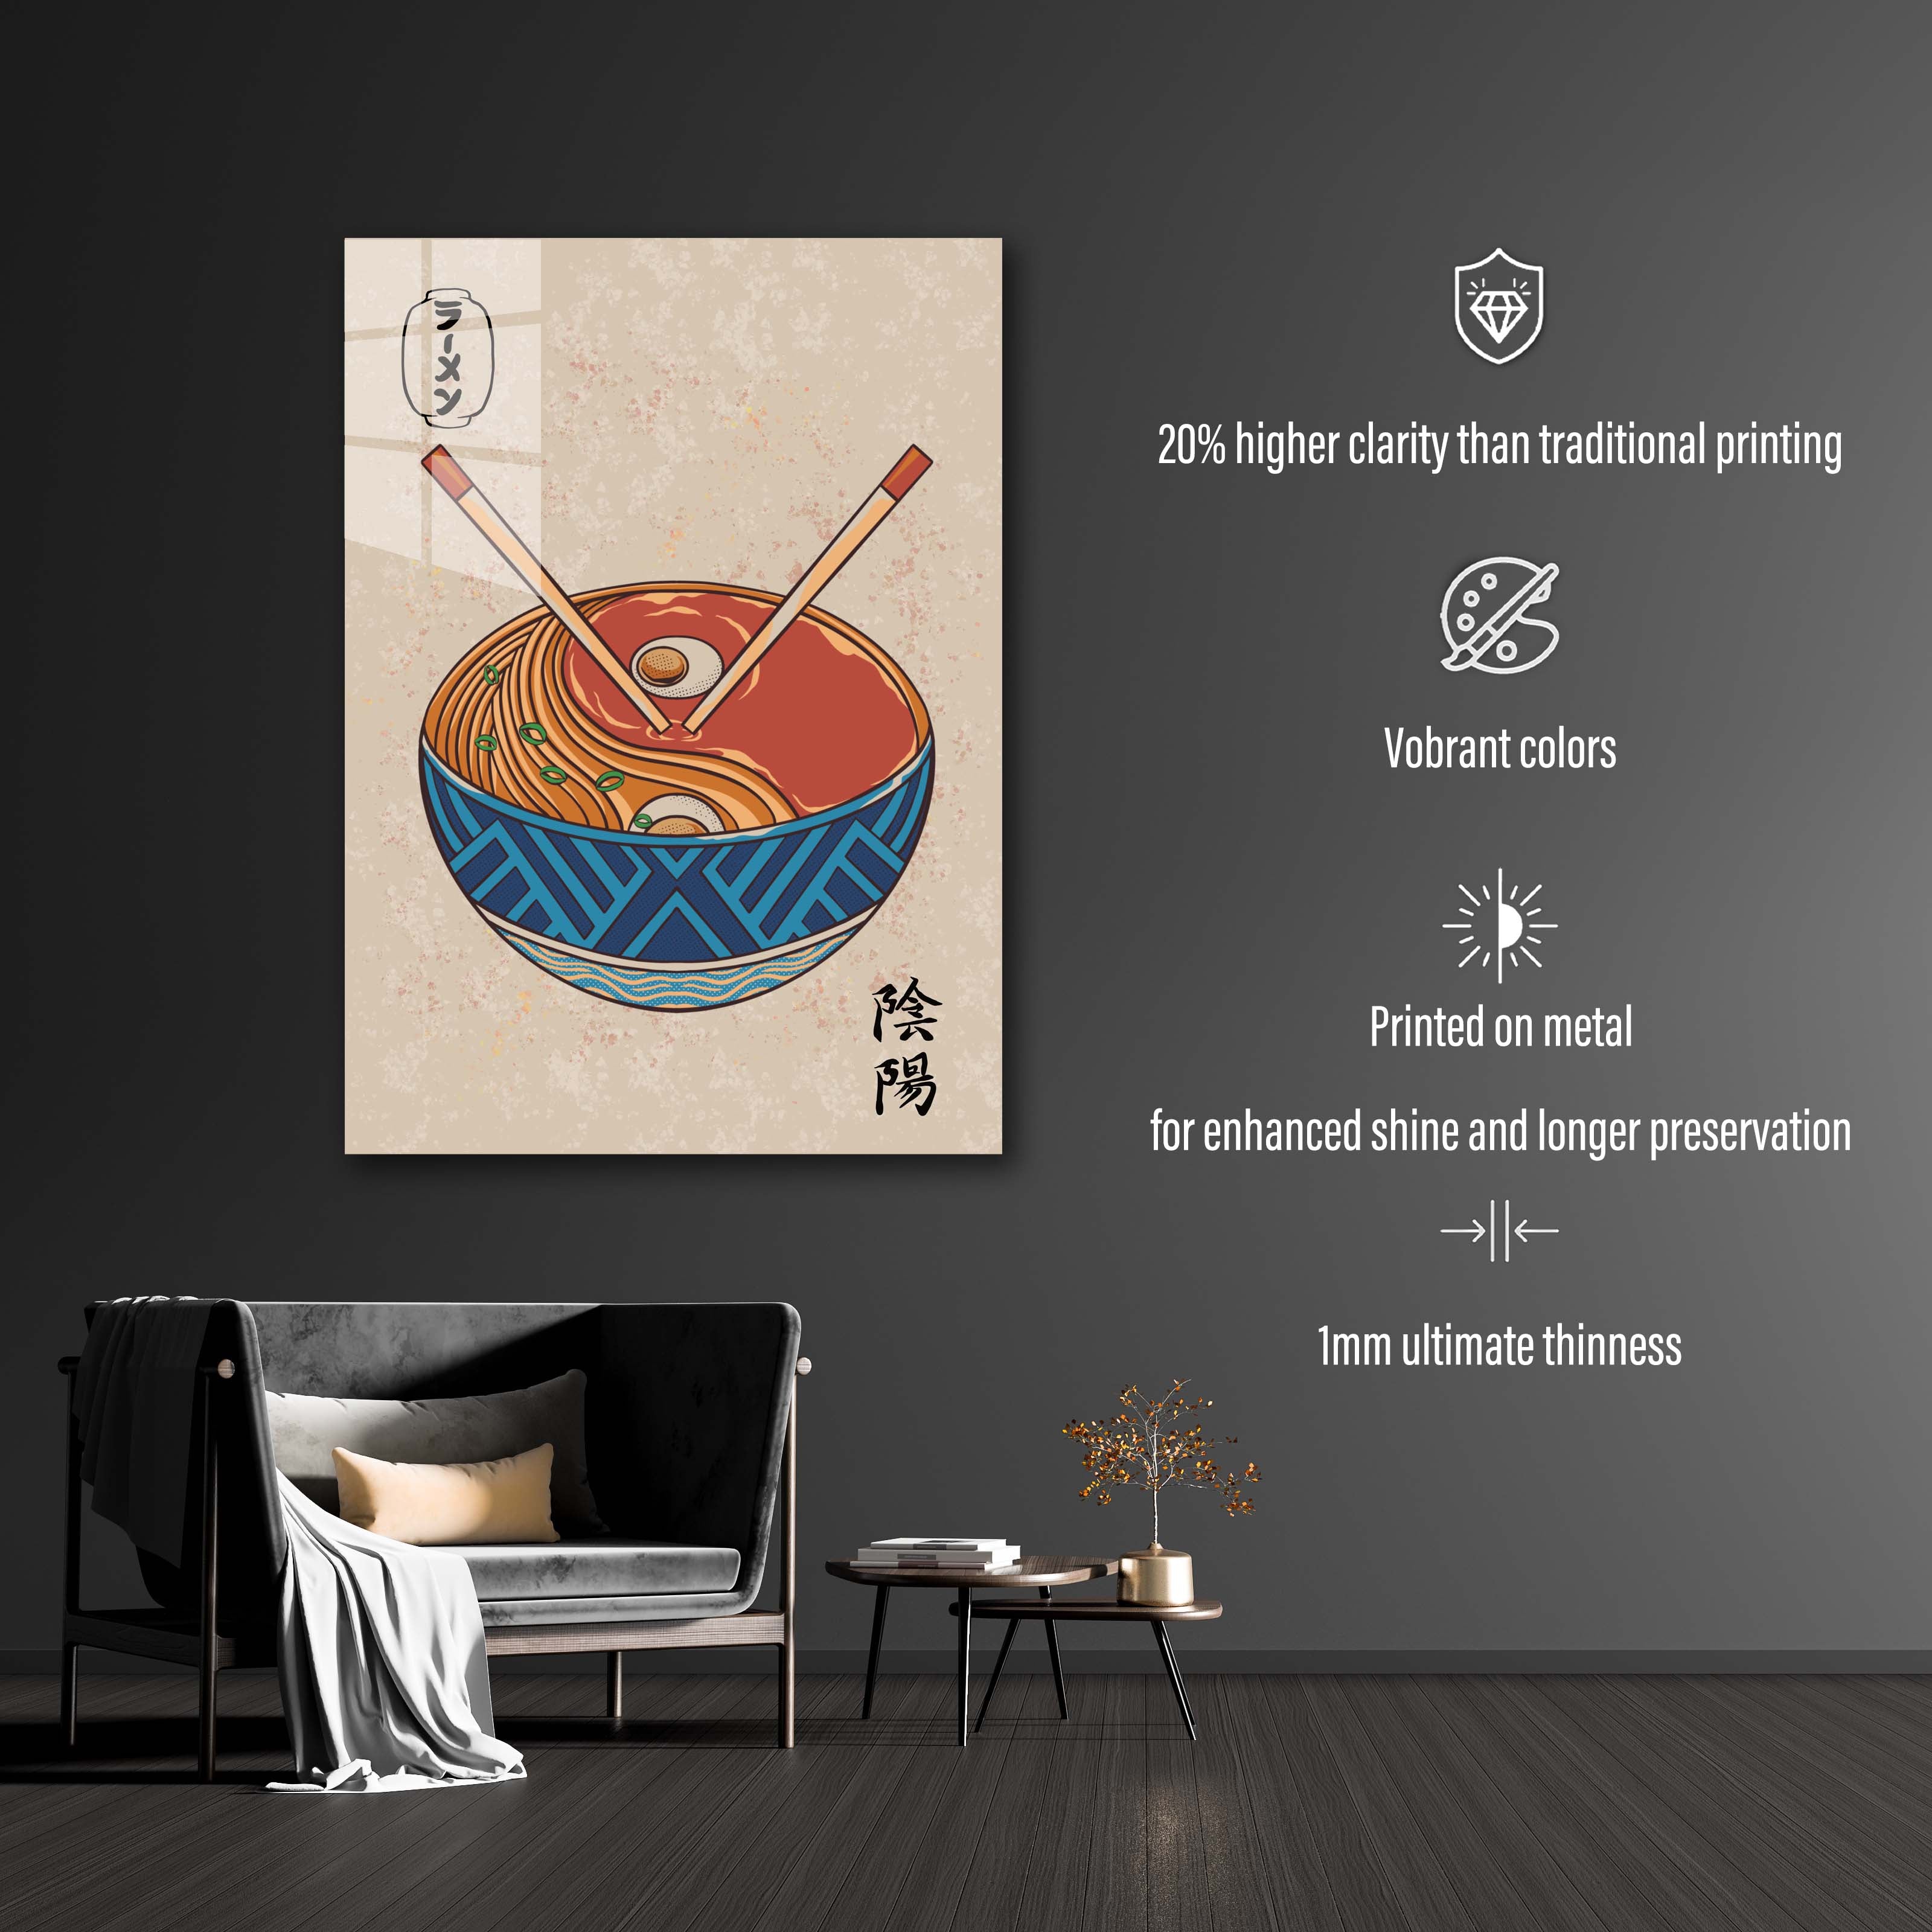 Yin and yang Ramen-designed by @Ardan ilustra